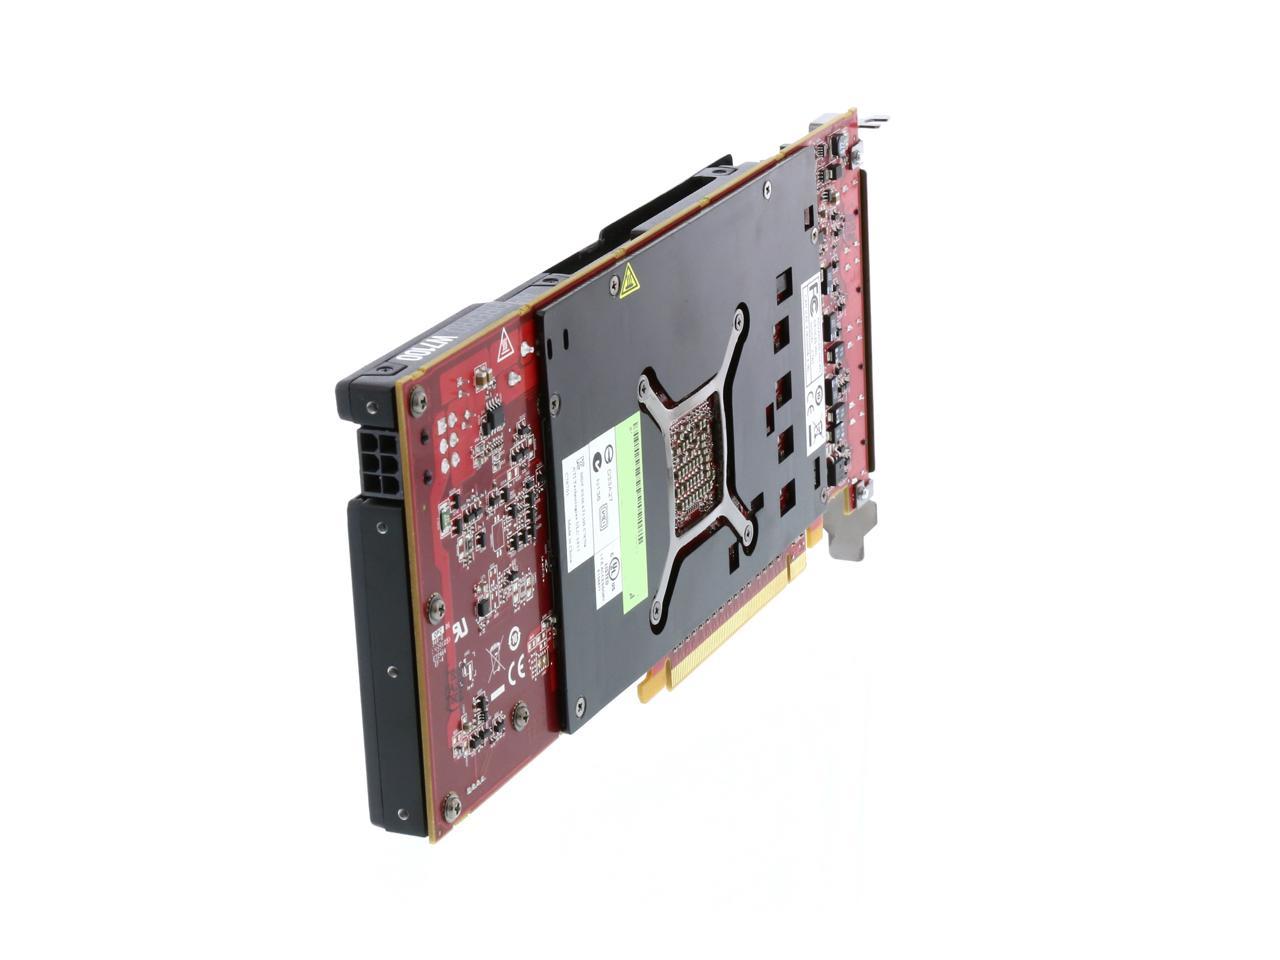 AMD FirePro W7100 100-505724 8GB 256-bit GDDR5 PCI Express 3.0 x16 Full  height/full length single-slot Workstation Video Card